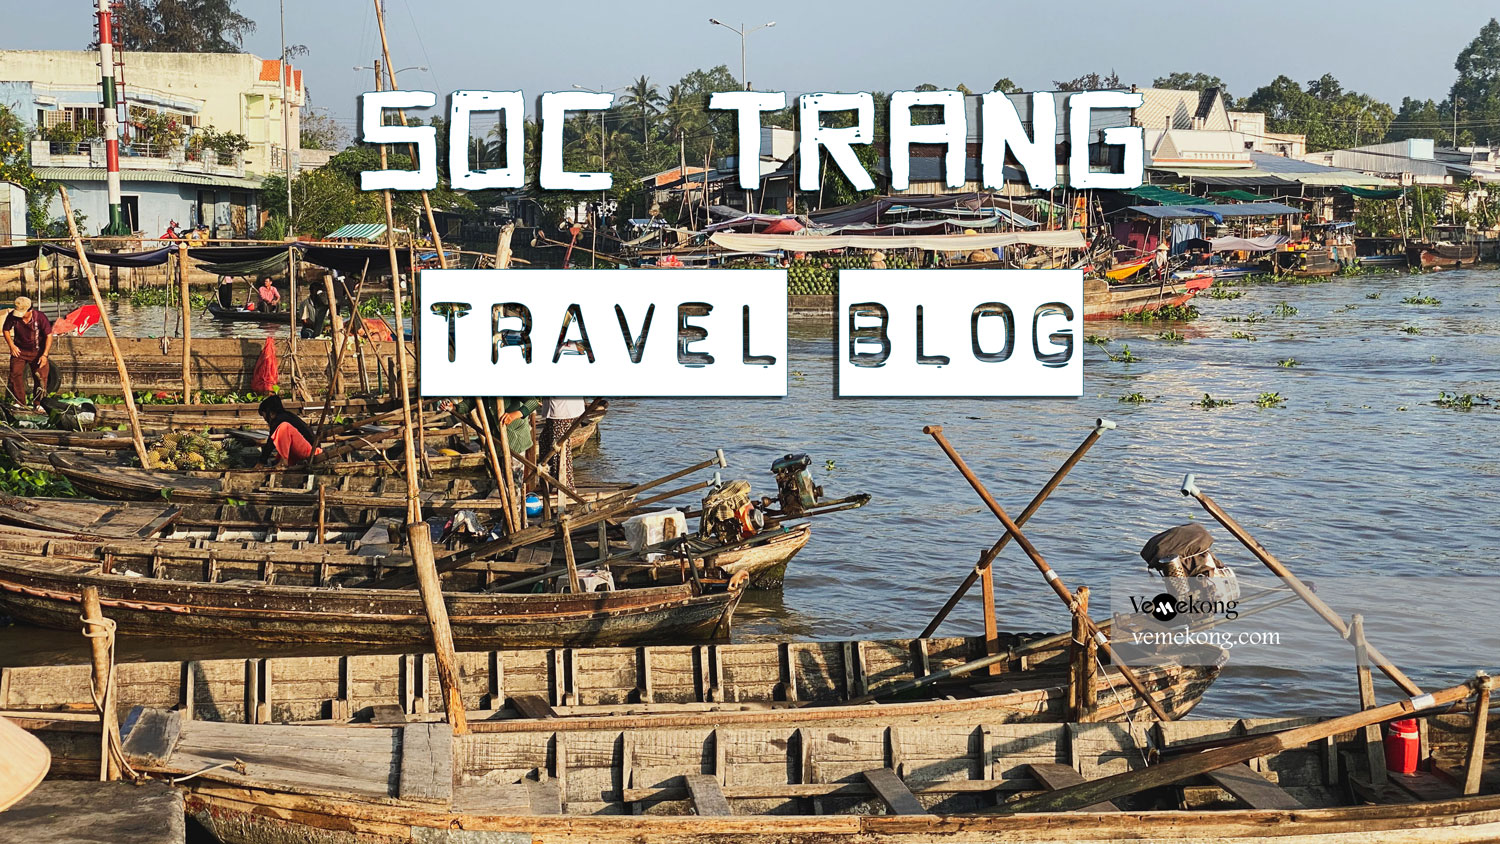 Soc Trang Travel Blog - How to Spend 3 Days in Soc Trang, Vietnam